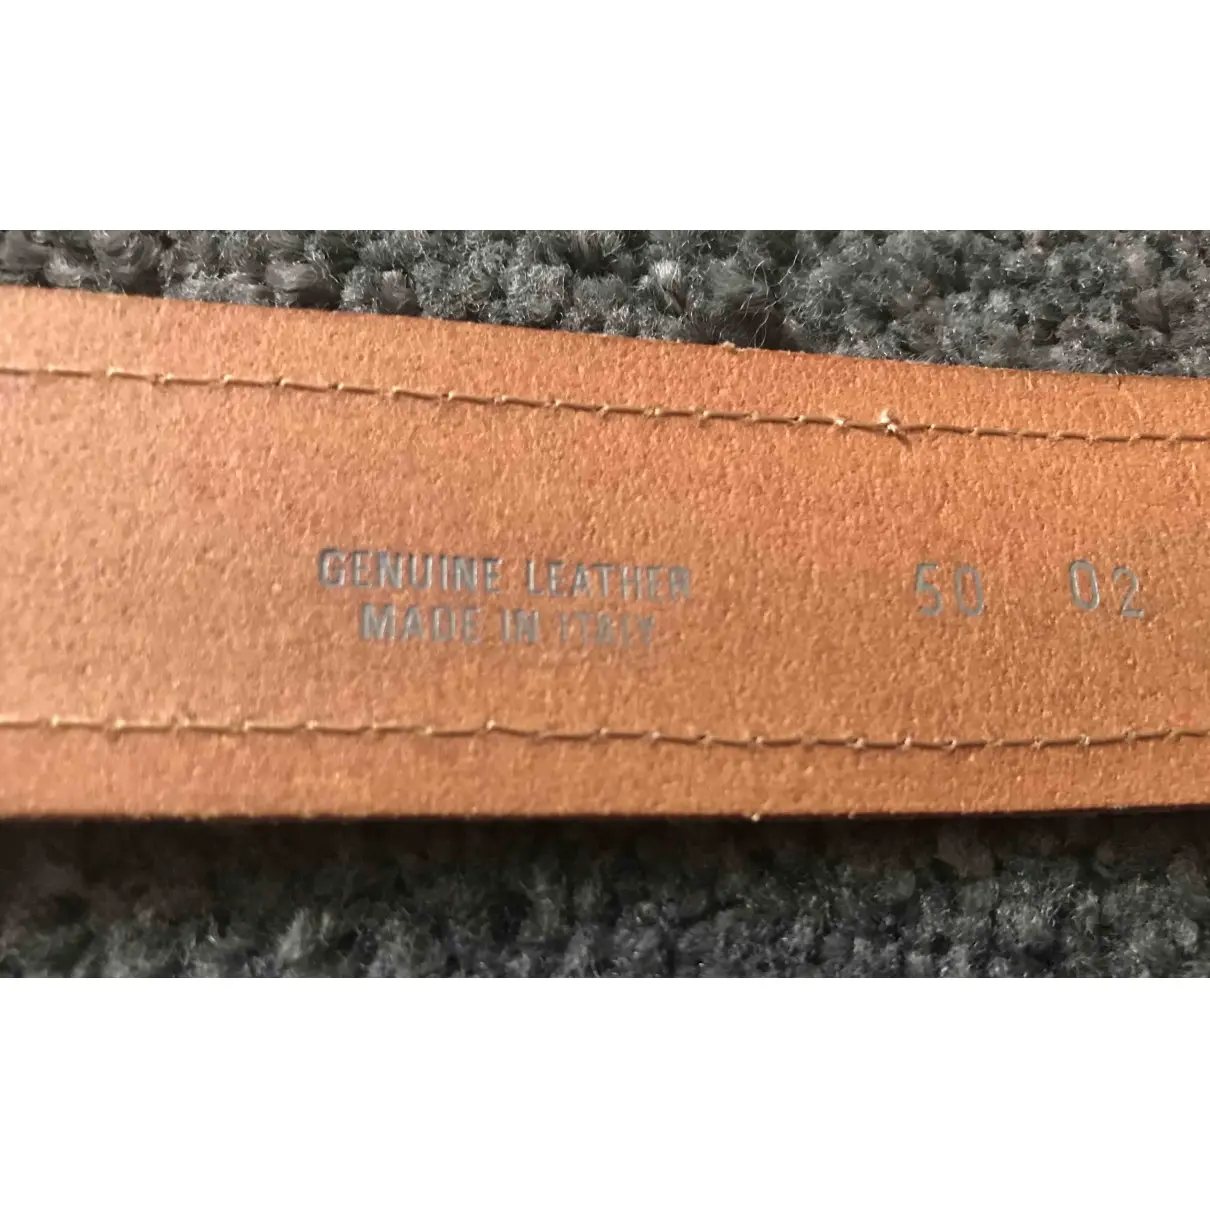 Buy Bikkembergs Leather belt online